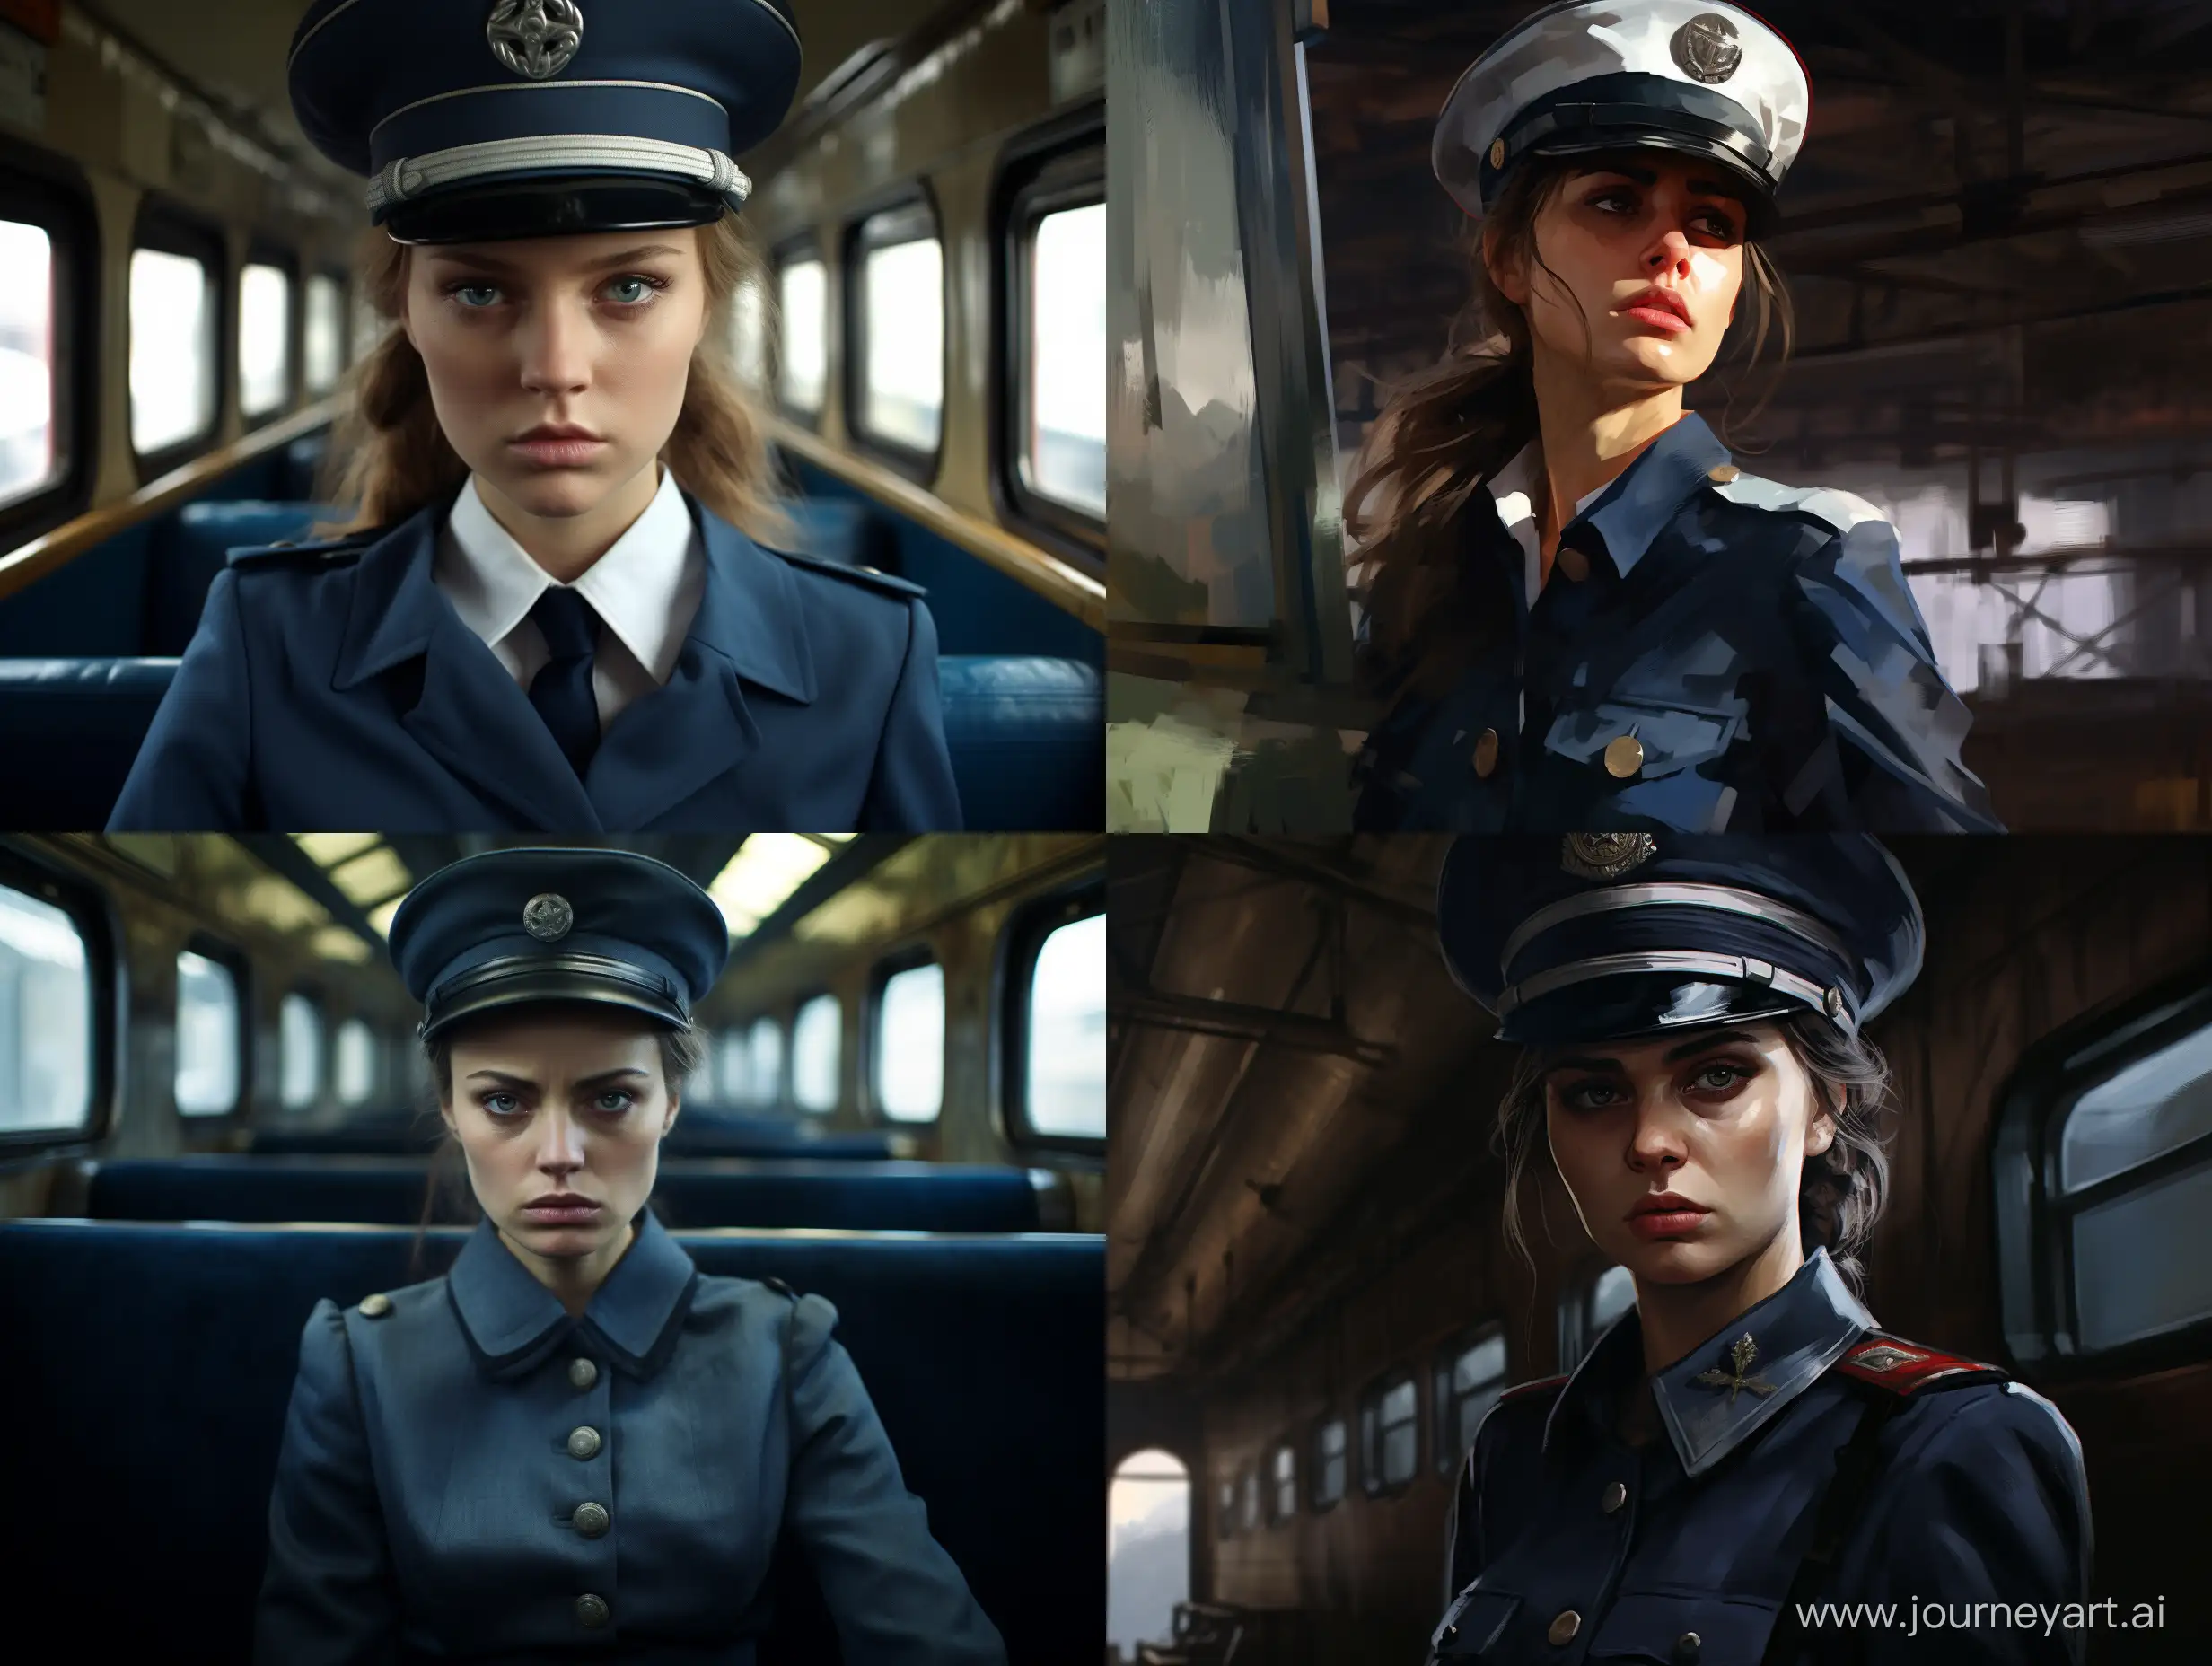 Furious-Russian-Train-Conductor-in-Blue-Uniform-and-Pilotka-Headgear